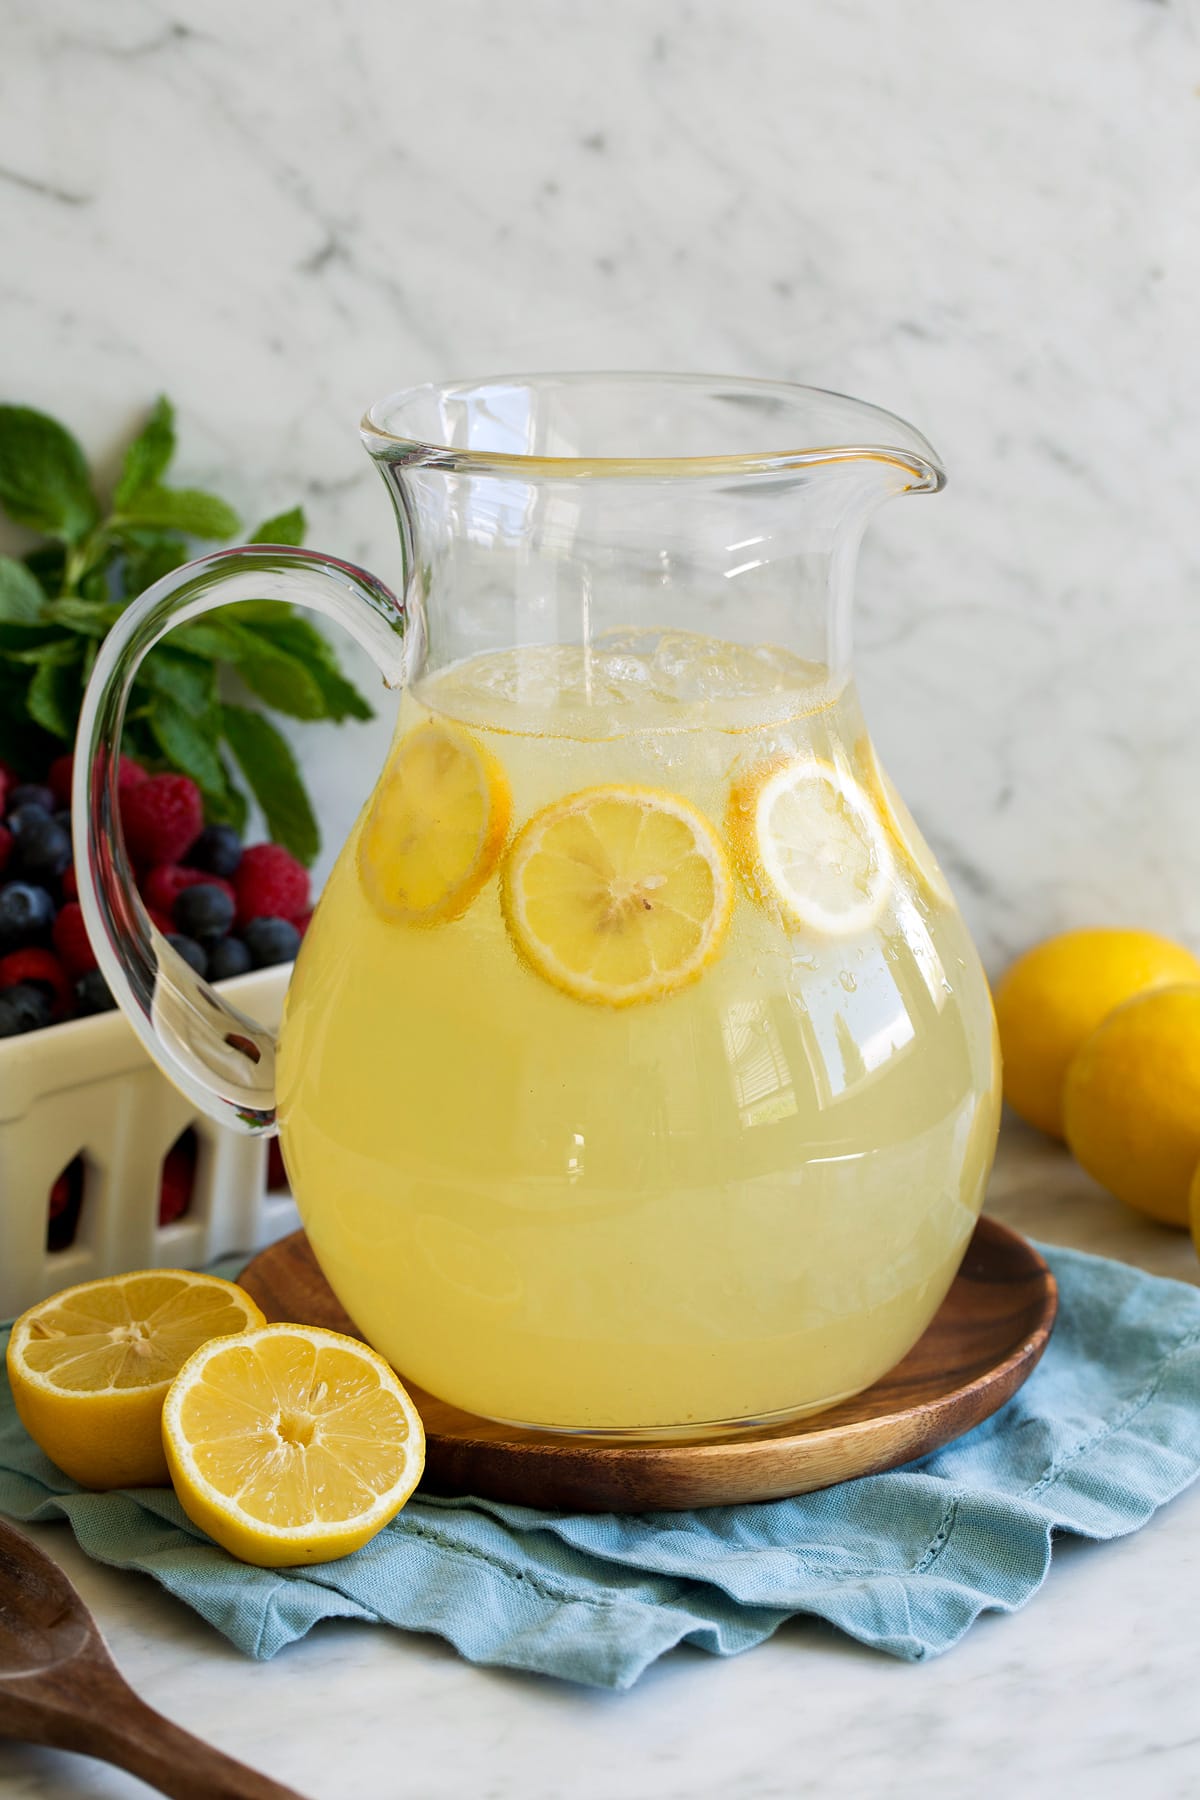 https://www.cookingclassy.com/wp-content/uploads/2019/06/lemonade-2.jpg